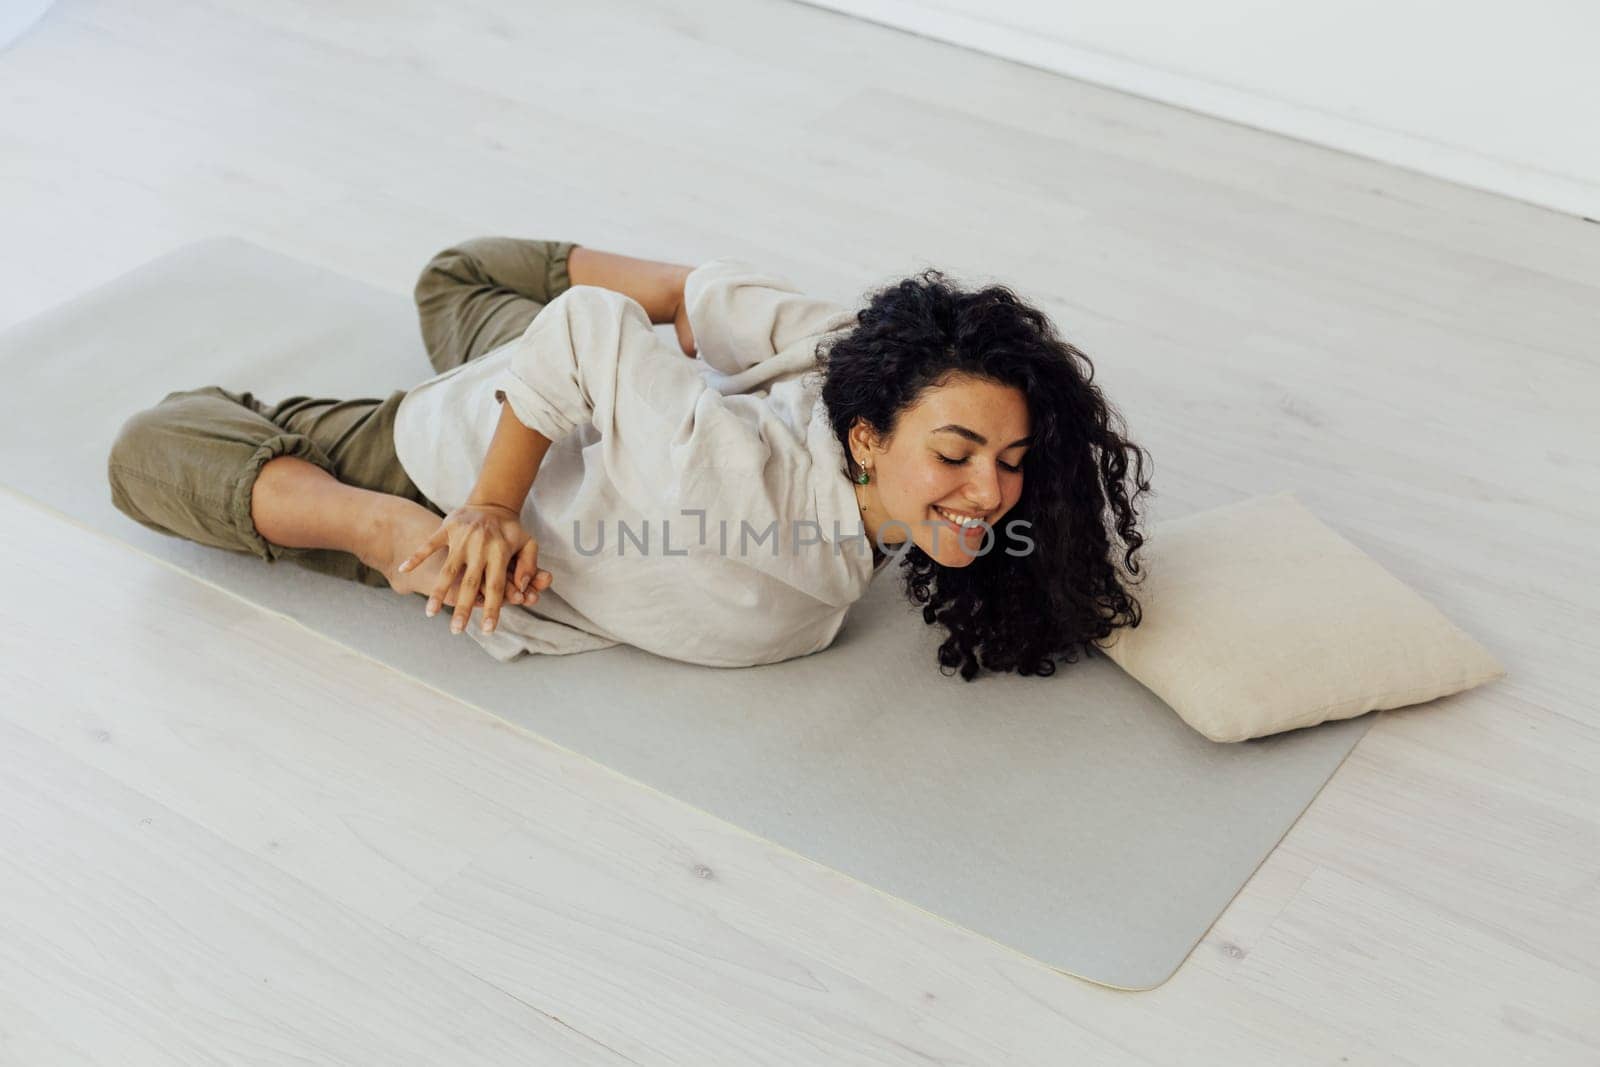 Brunette woman engaged in yoga asana gymnastics flexibility body by Simakov